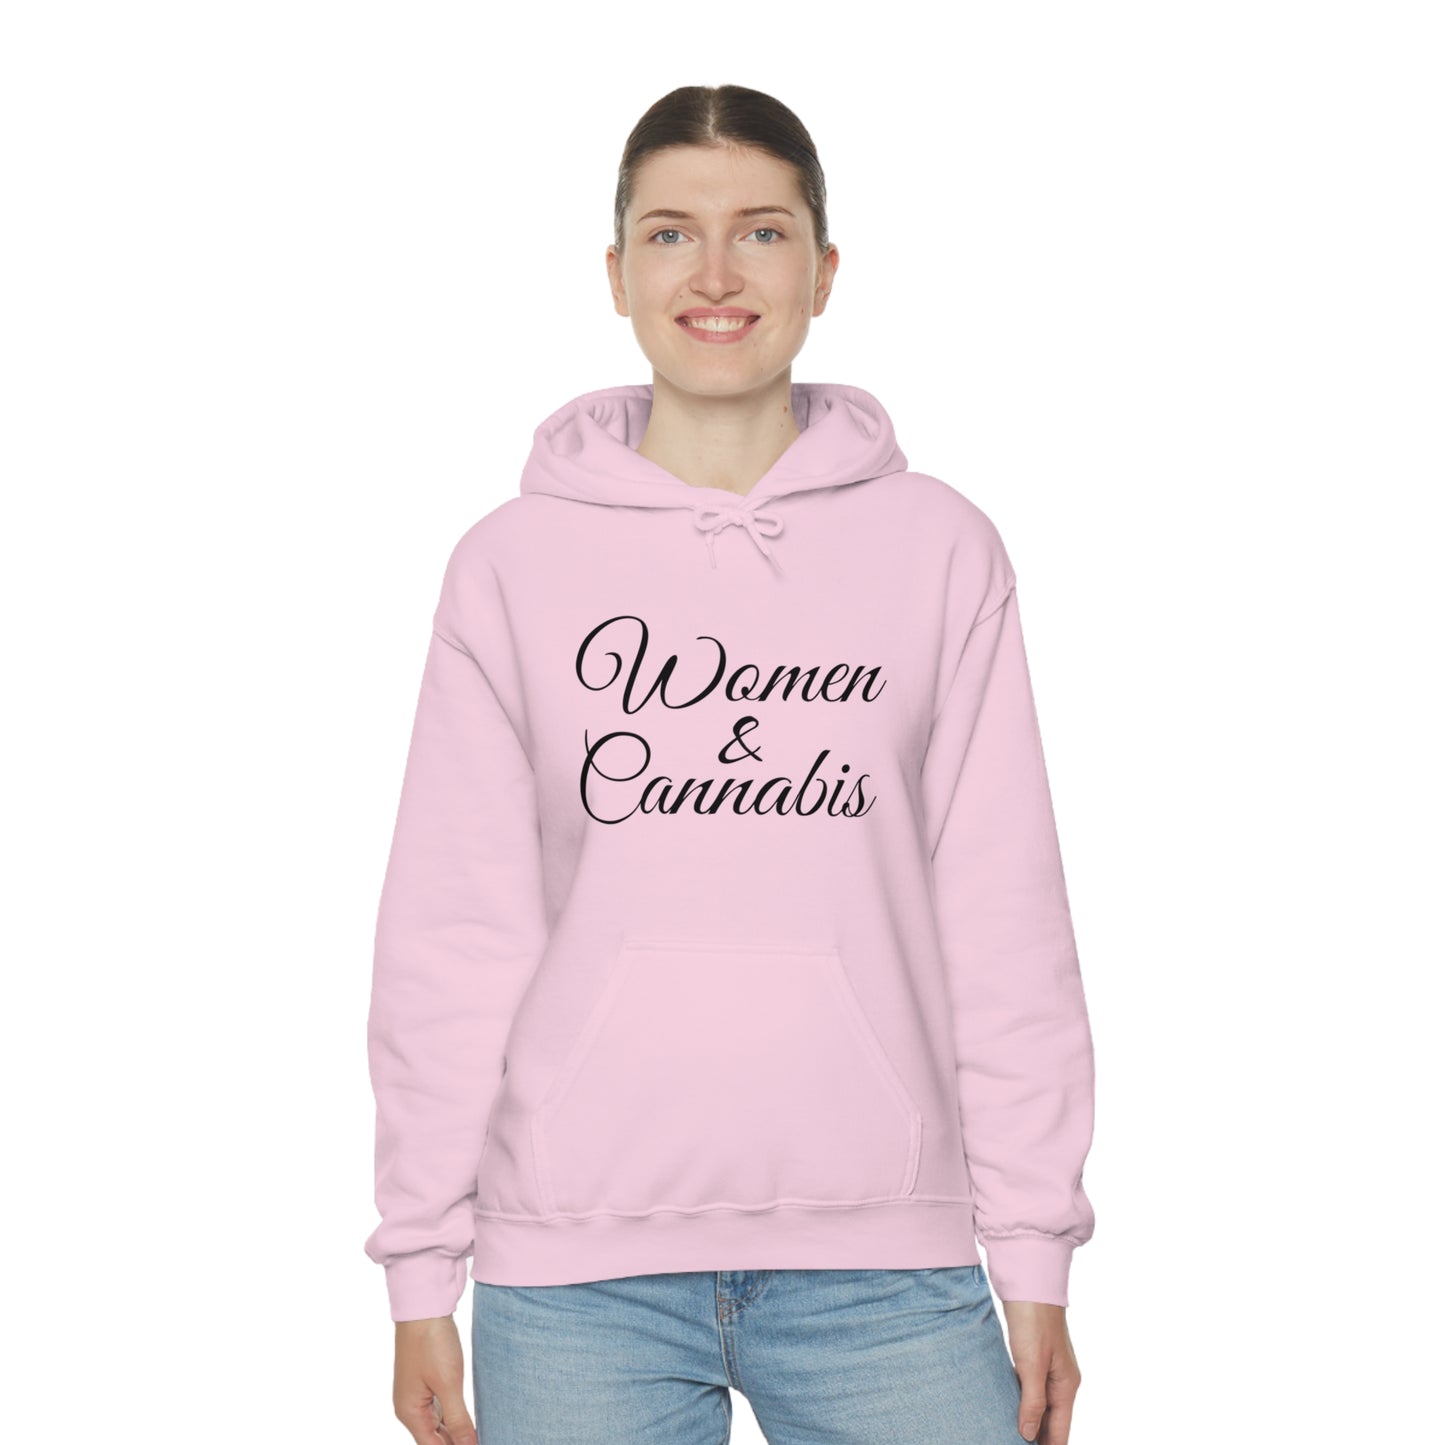 Unisex Women & Cannabis Heavy Blend™ Hooded Sweatshirt